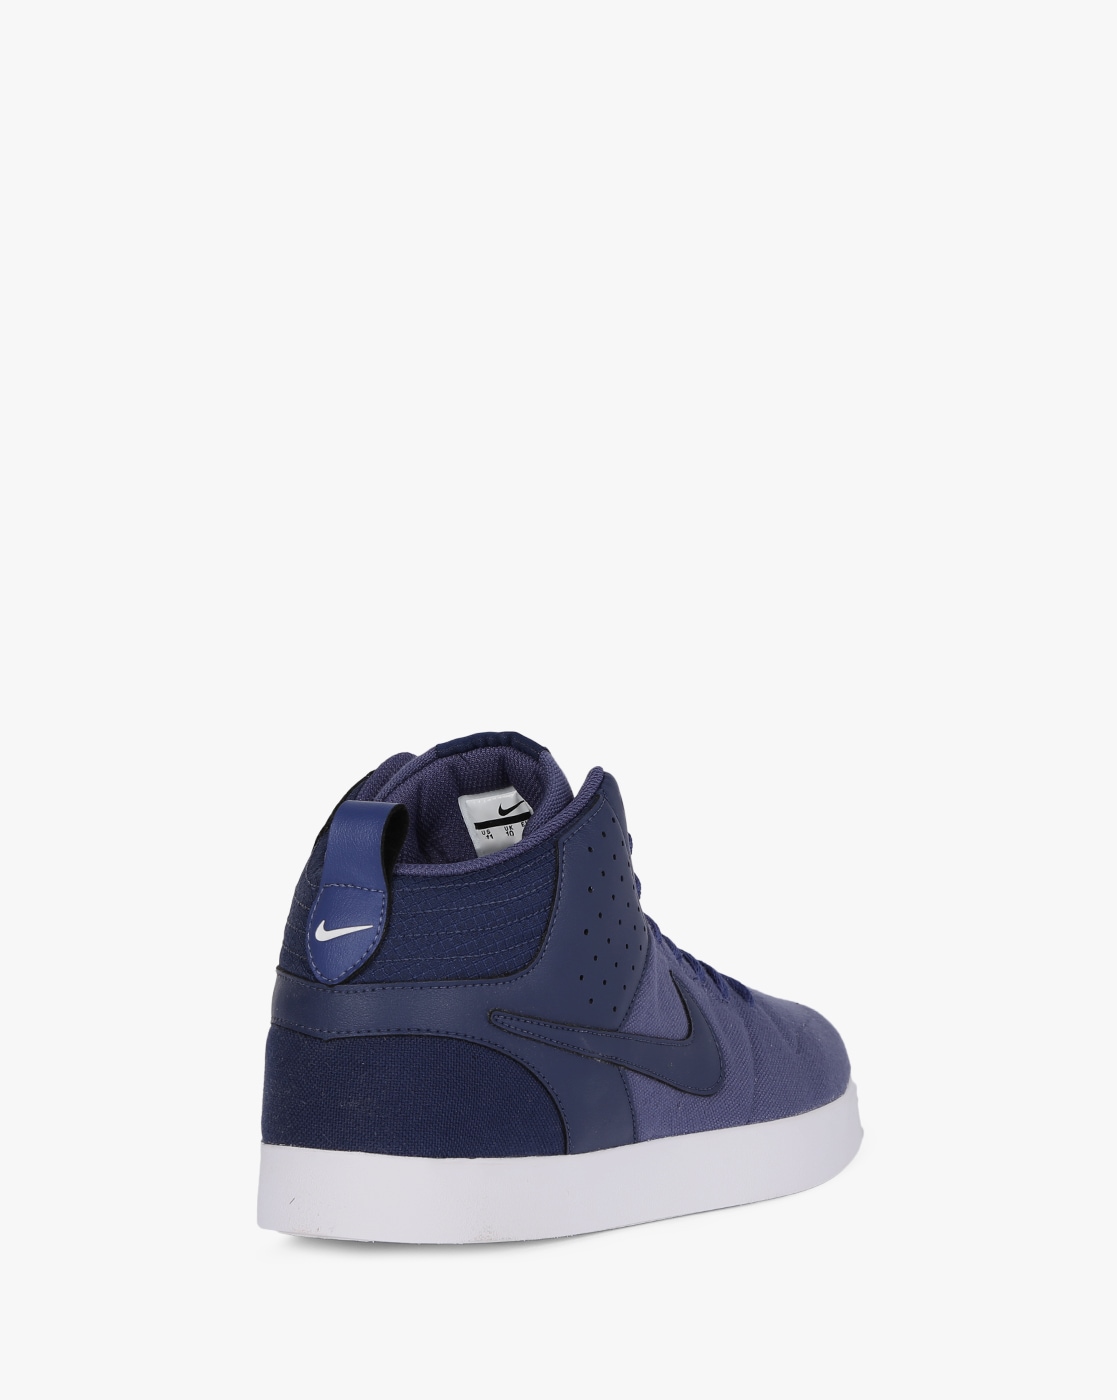 Buy Nike Men's Blue LITEFORCE III Casual Shoes -7 UK (41 EU) (8 US)  (669593-403) at Amazon.in